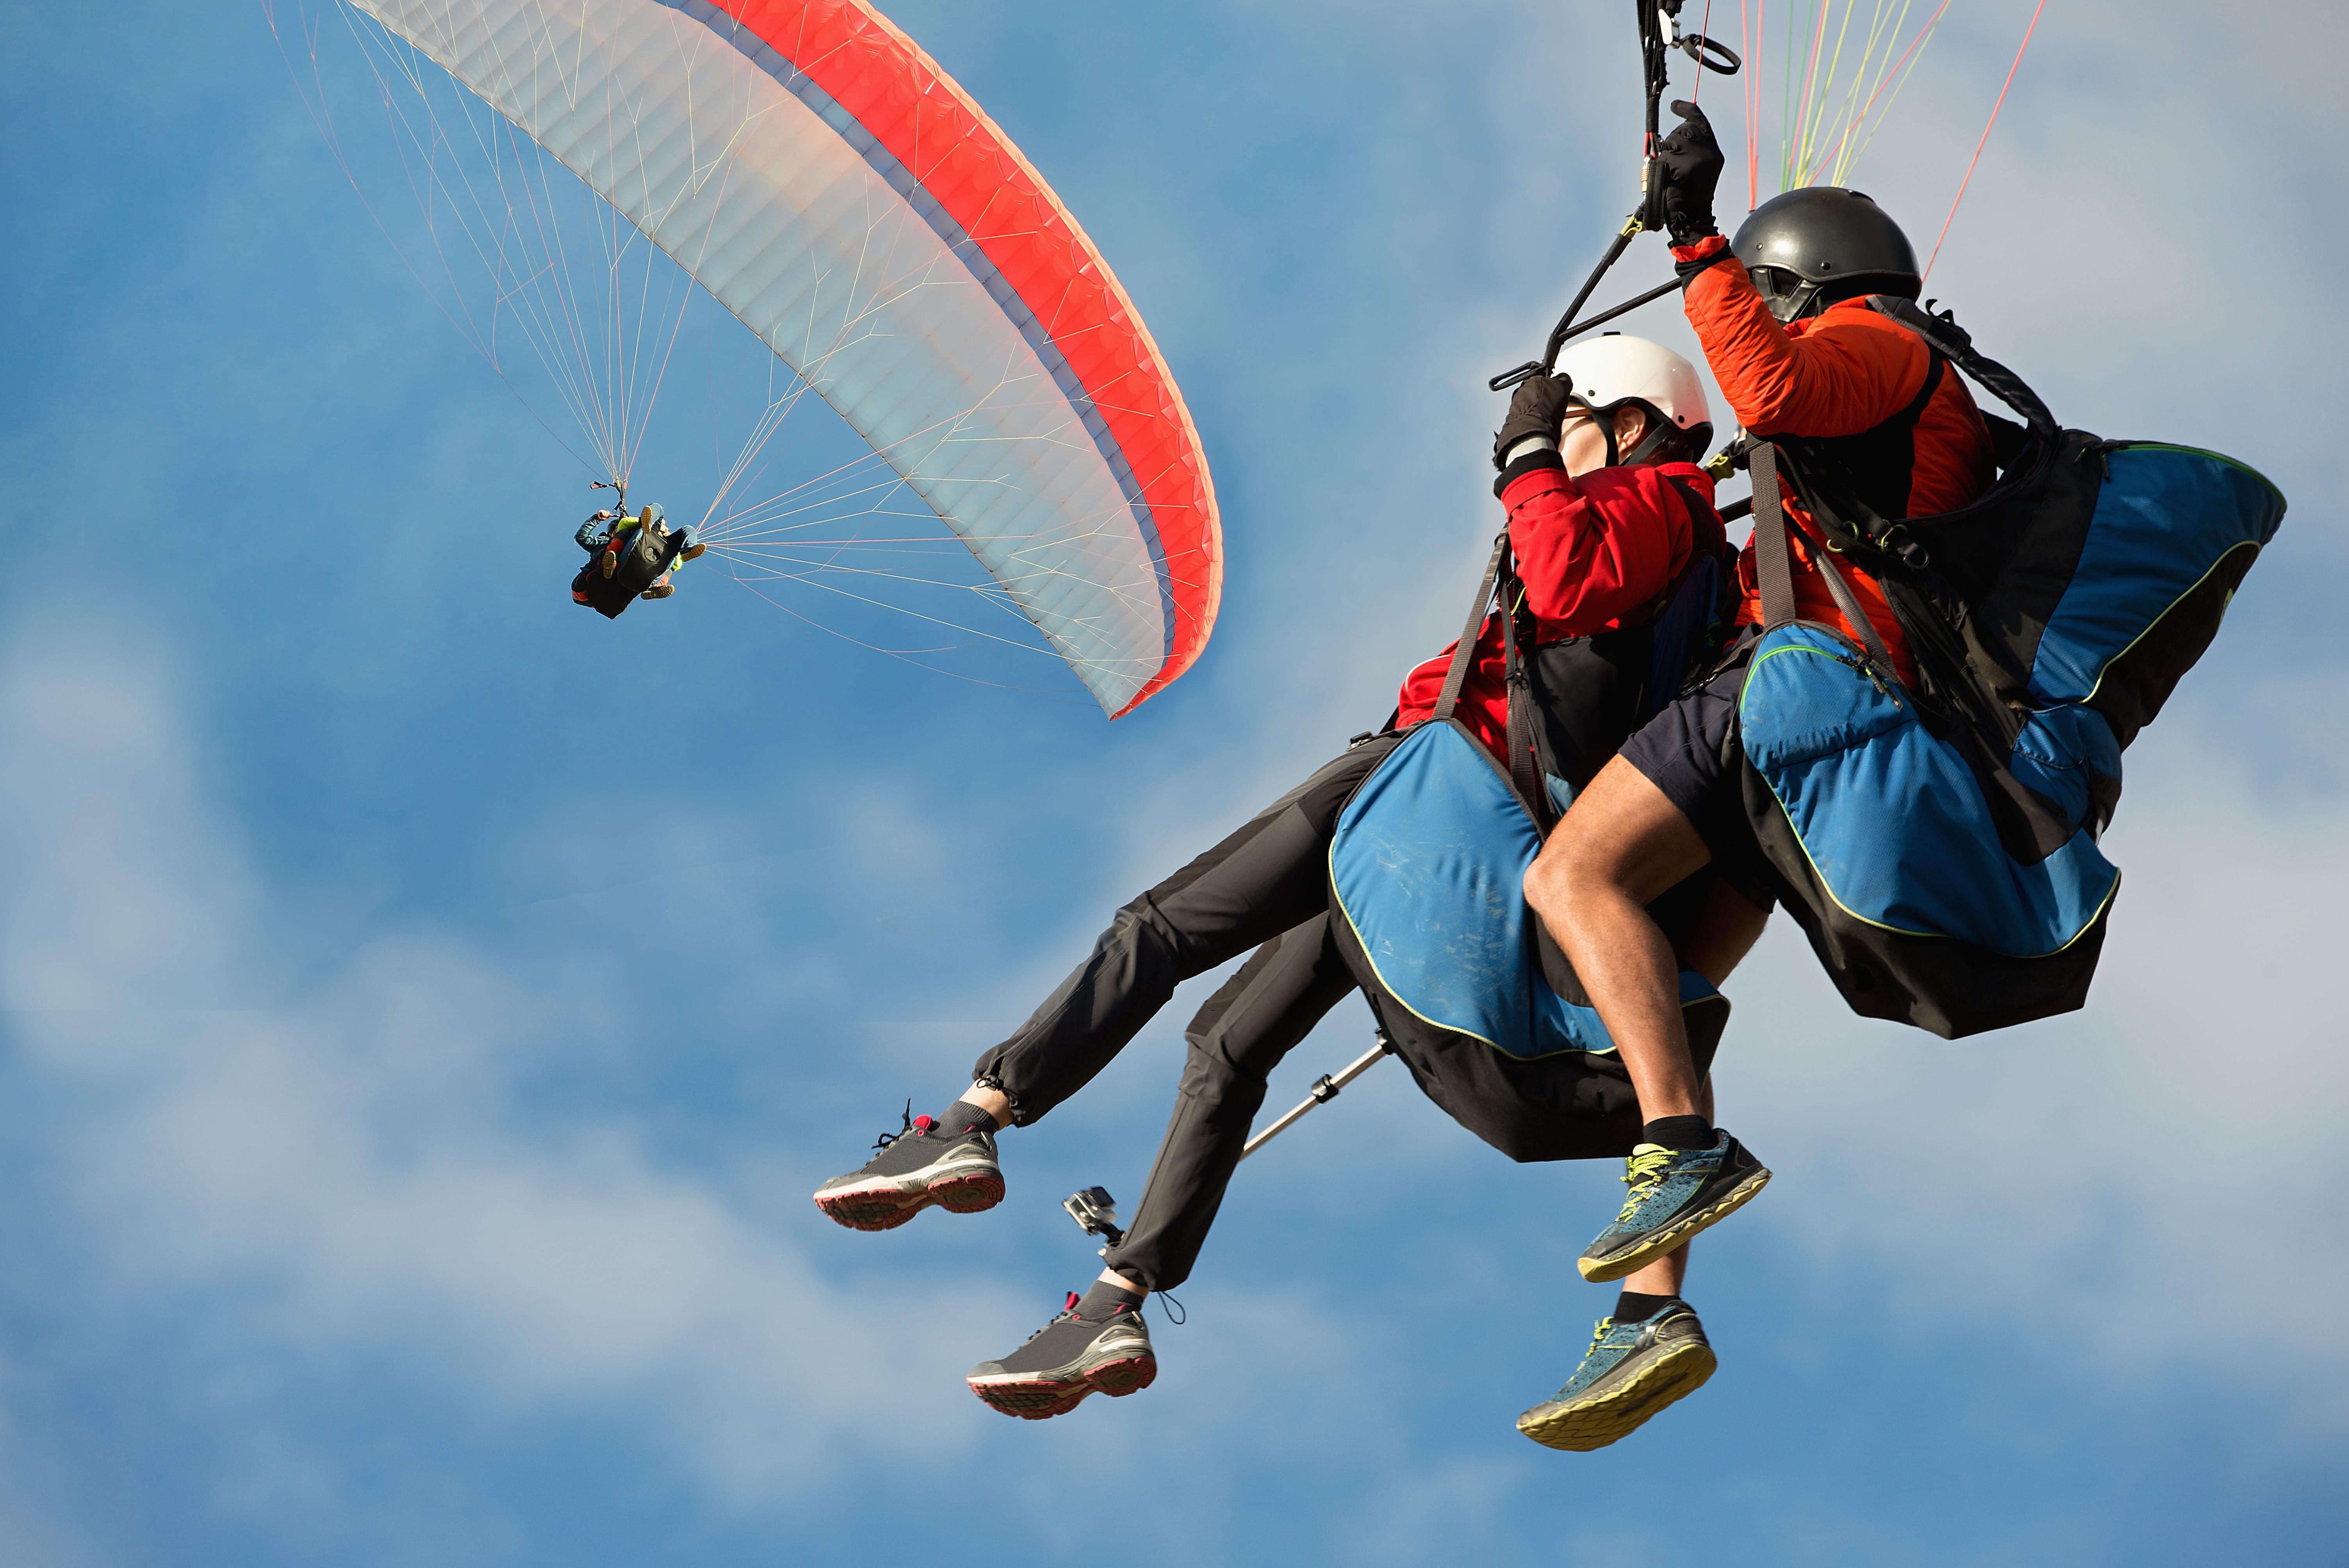 Two Person paragliding in interlaken.jpg